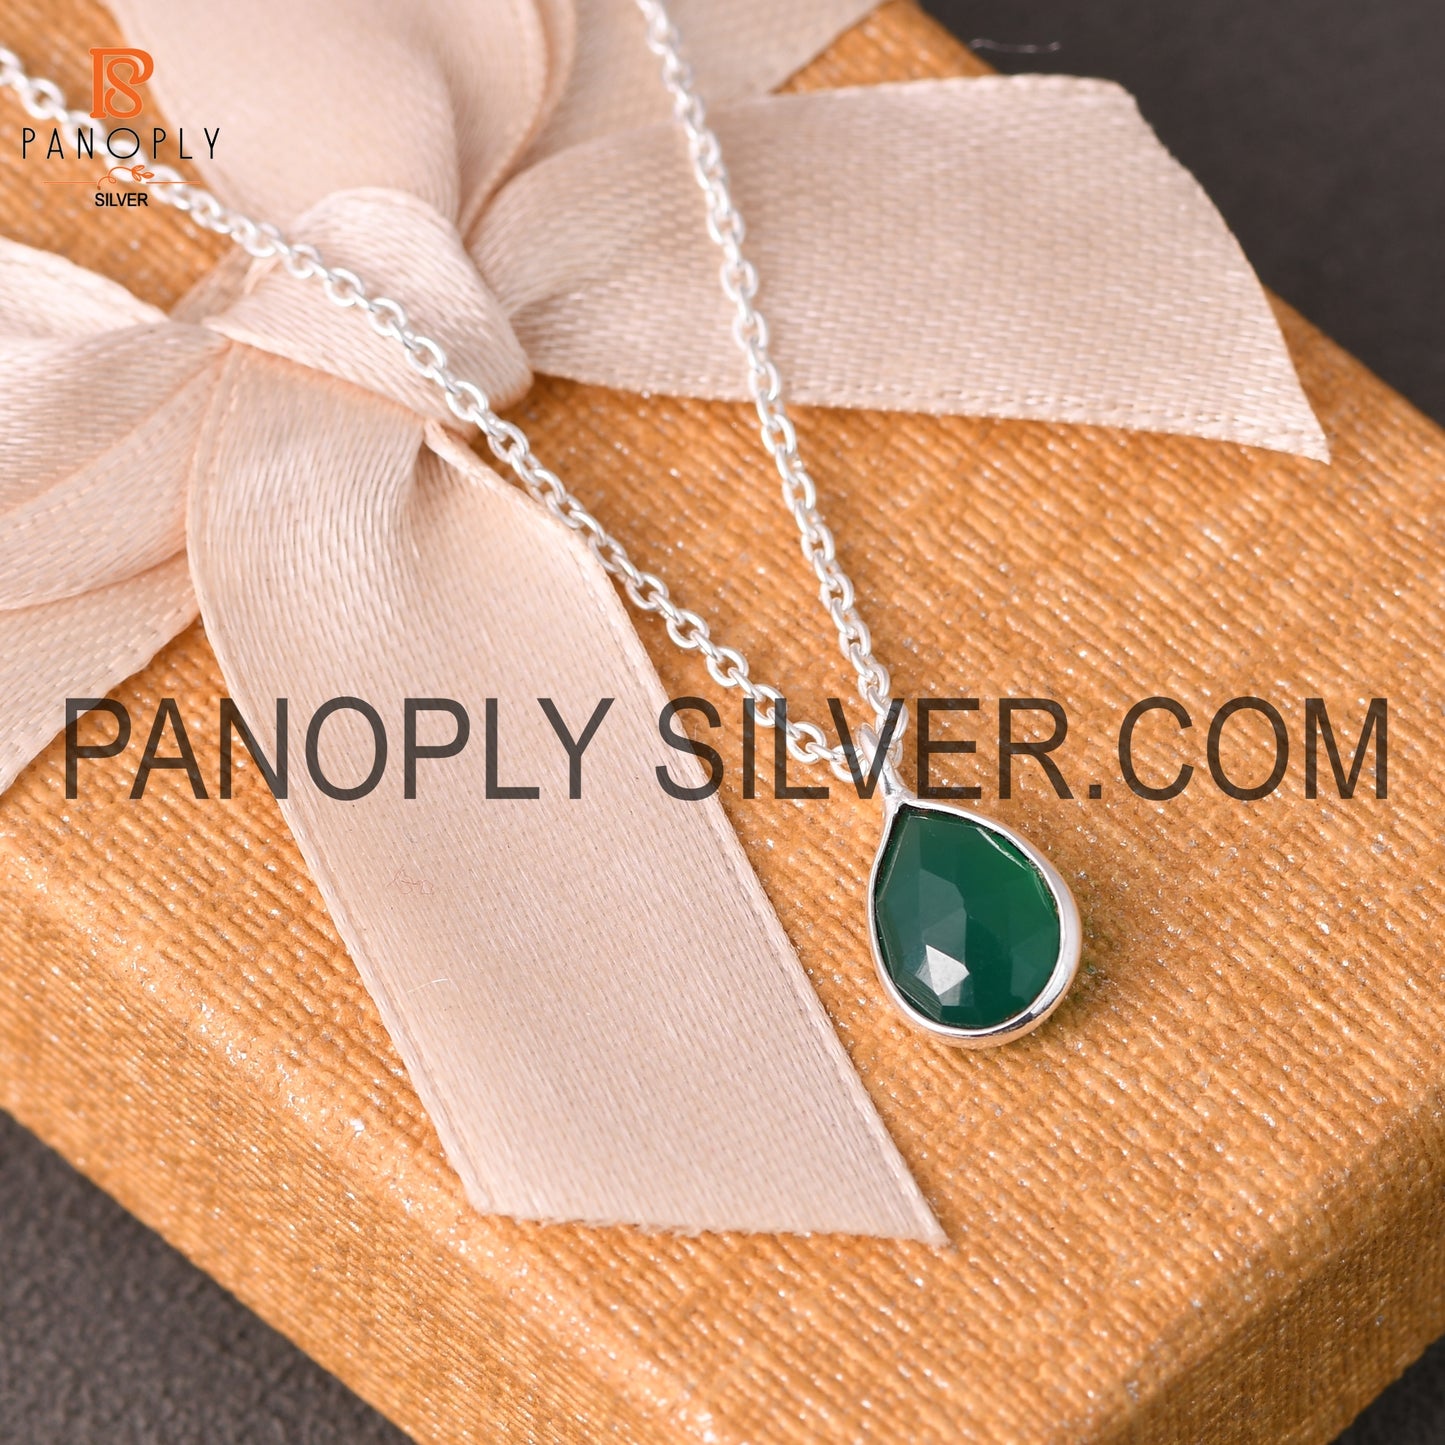 925 Sterling Silver Green Onyx Gemstone Drop Pendant